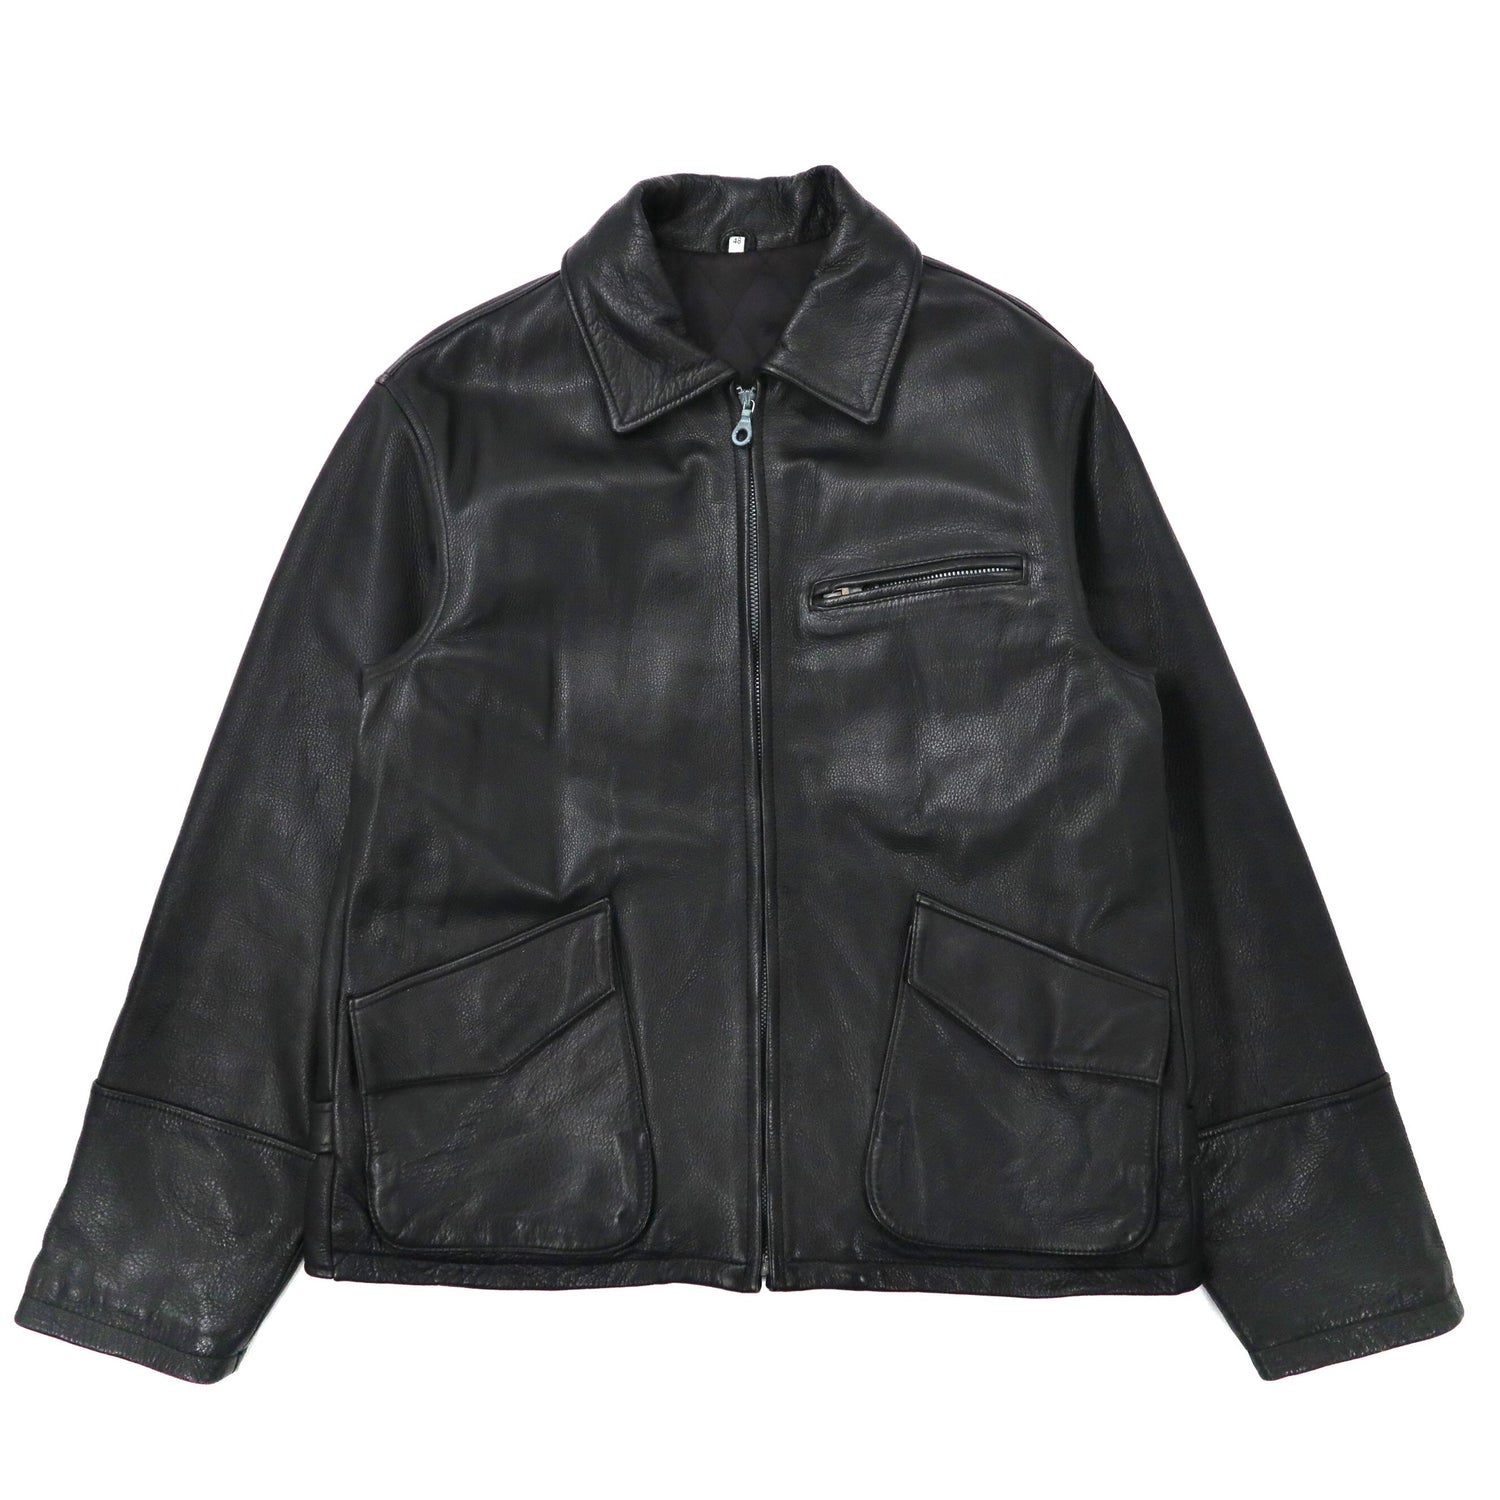 Closed UOMO DONNA Leather Tracker Jacket 48 Black Cowhide Riri Zip